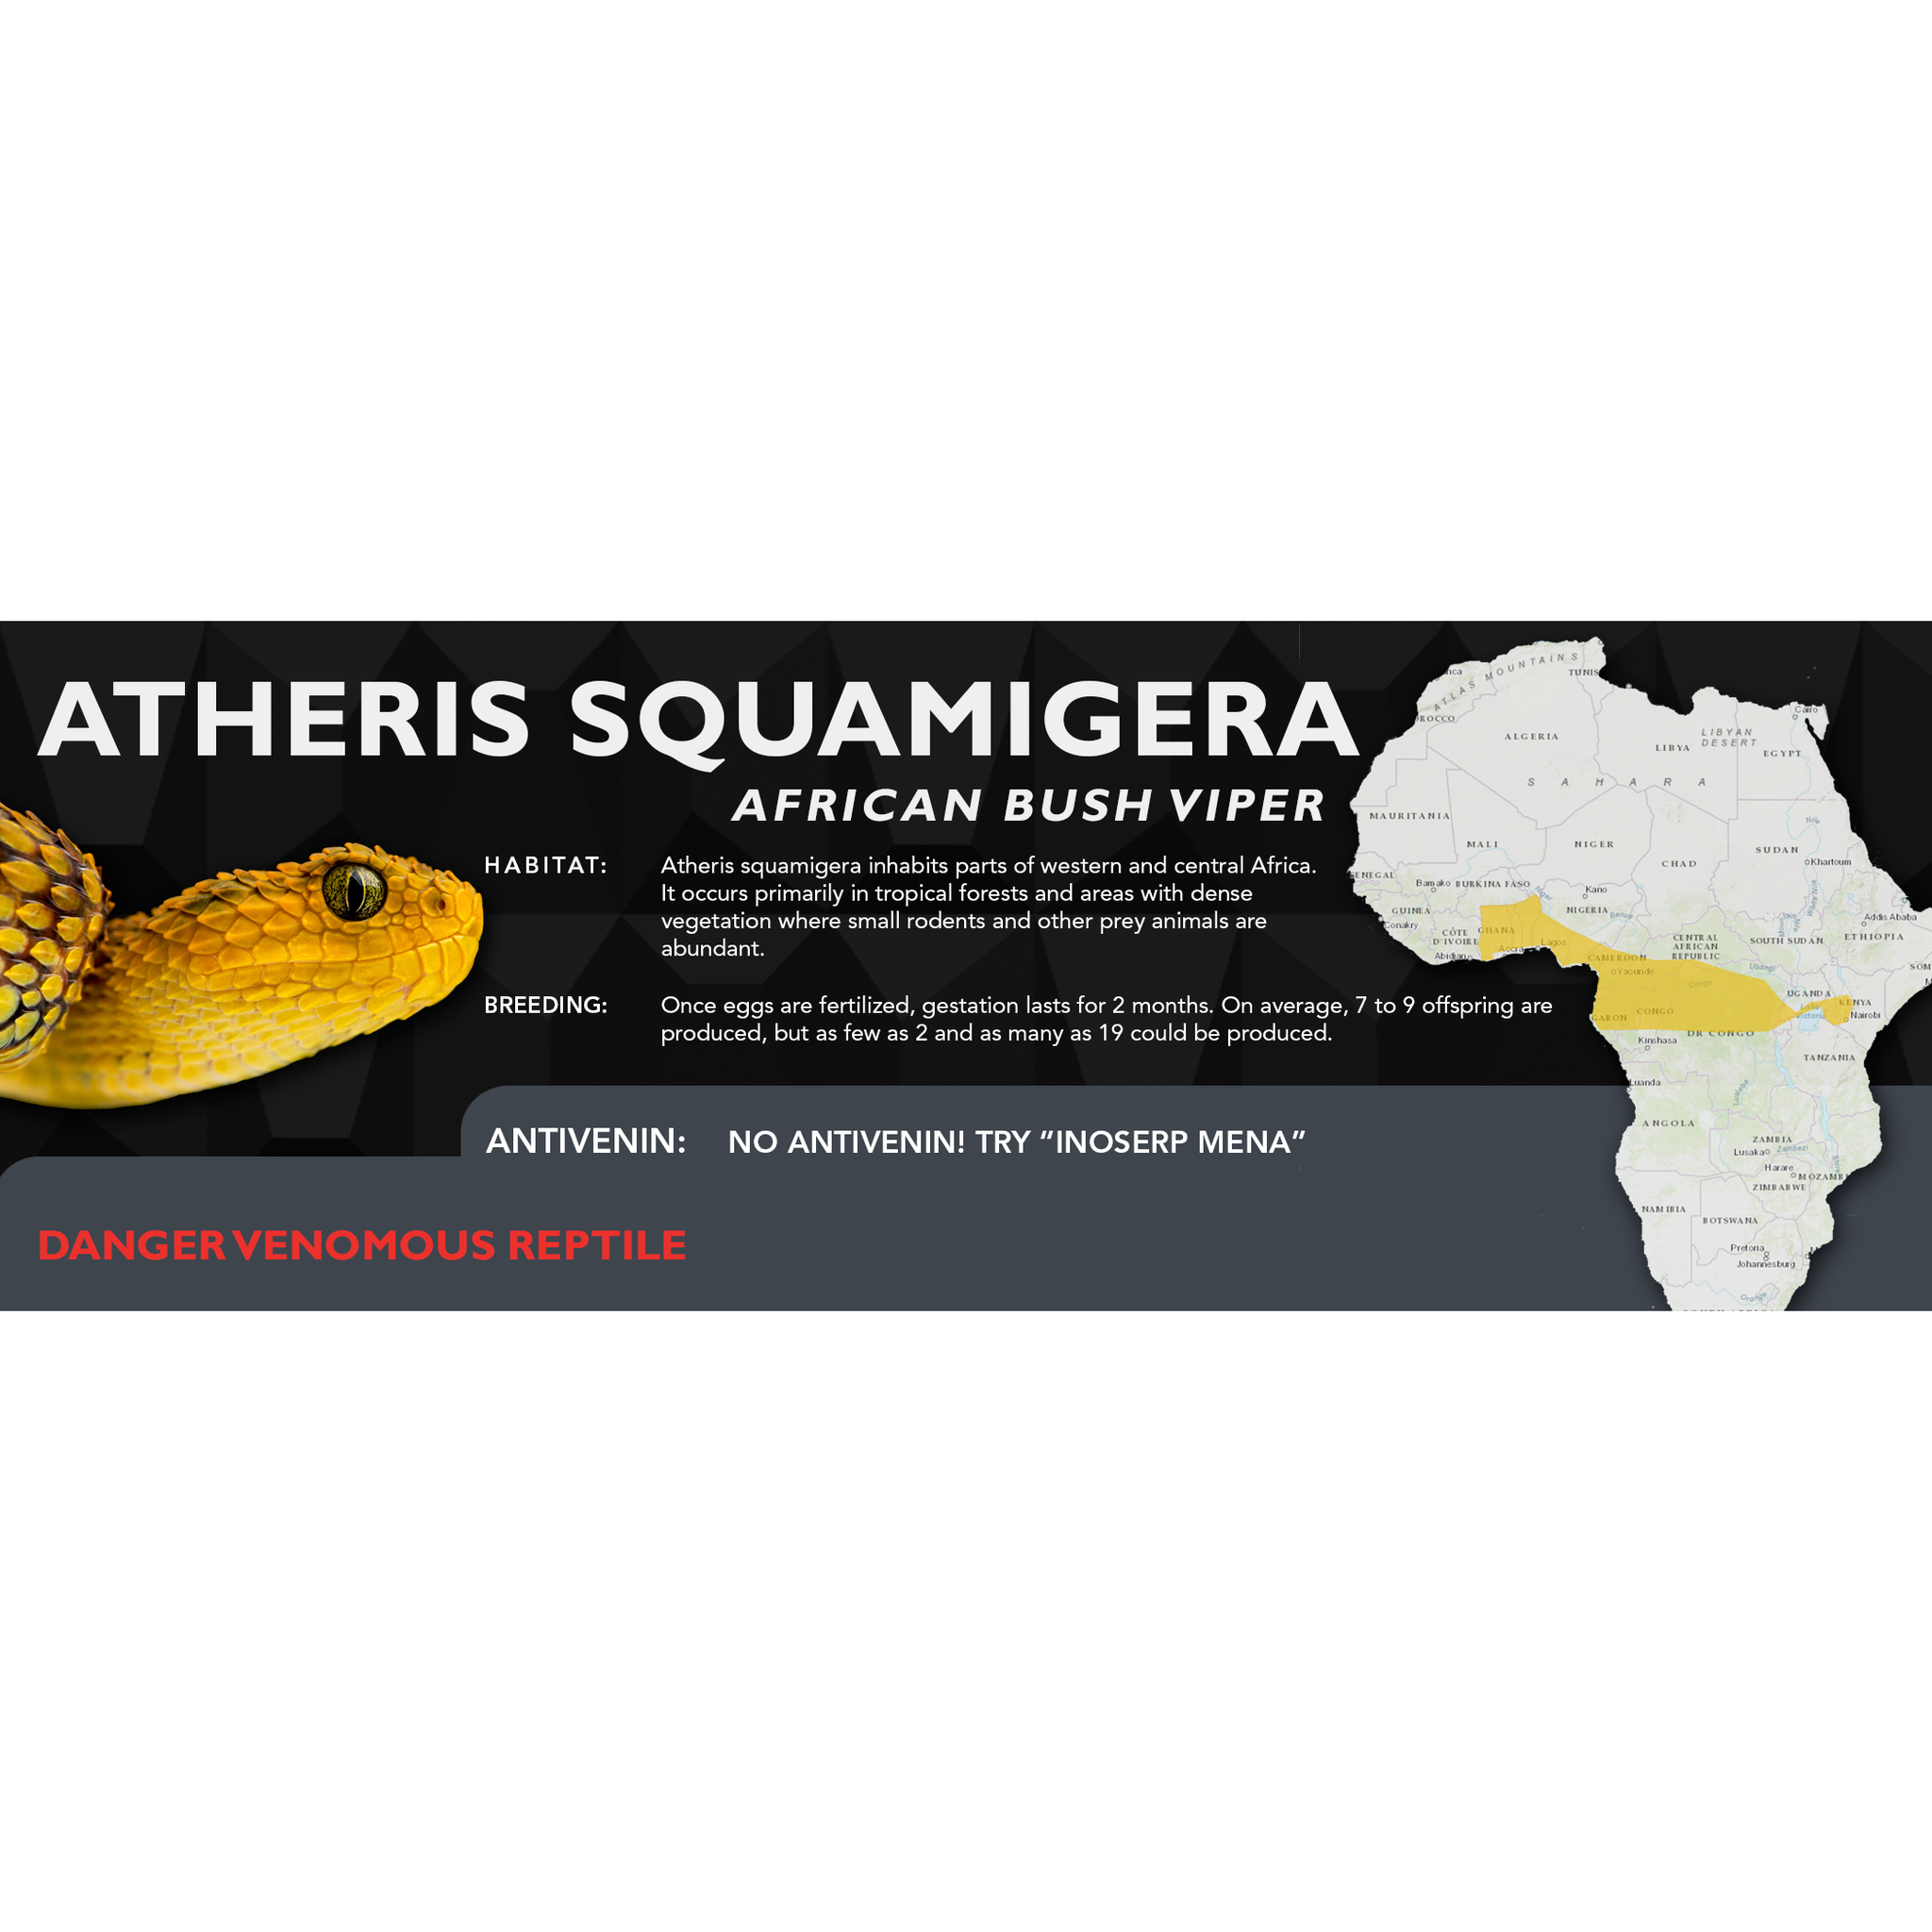 ADW: Atheris squamigera: INFORMATION